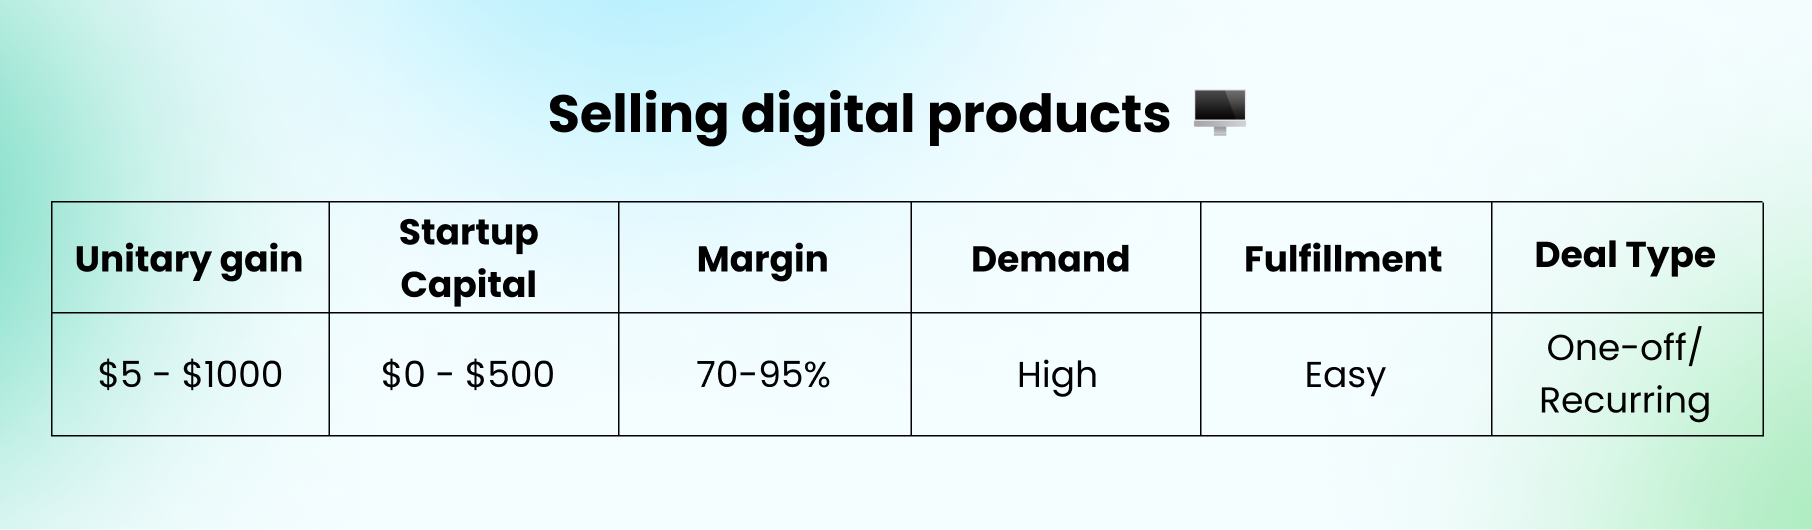 Is selling digital products a good side hustle idea?